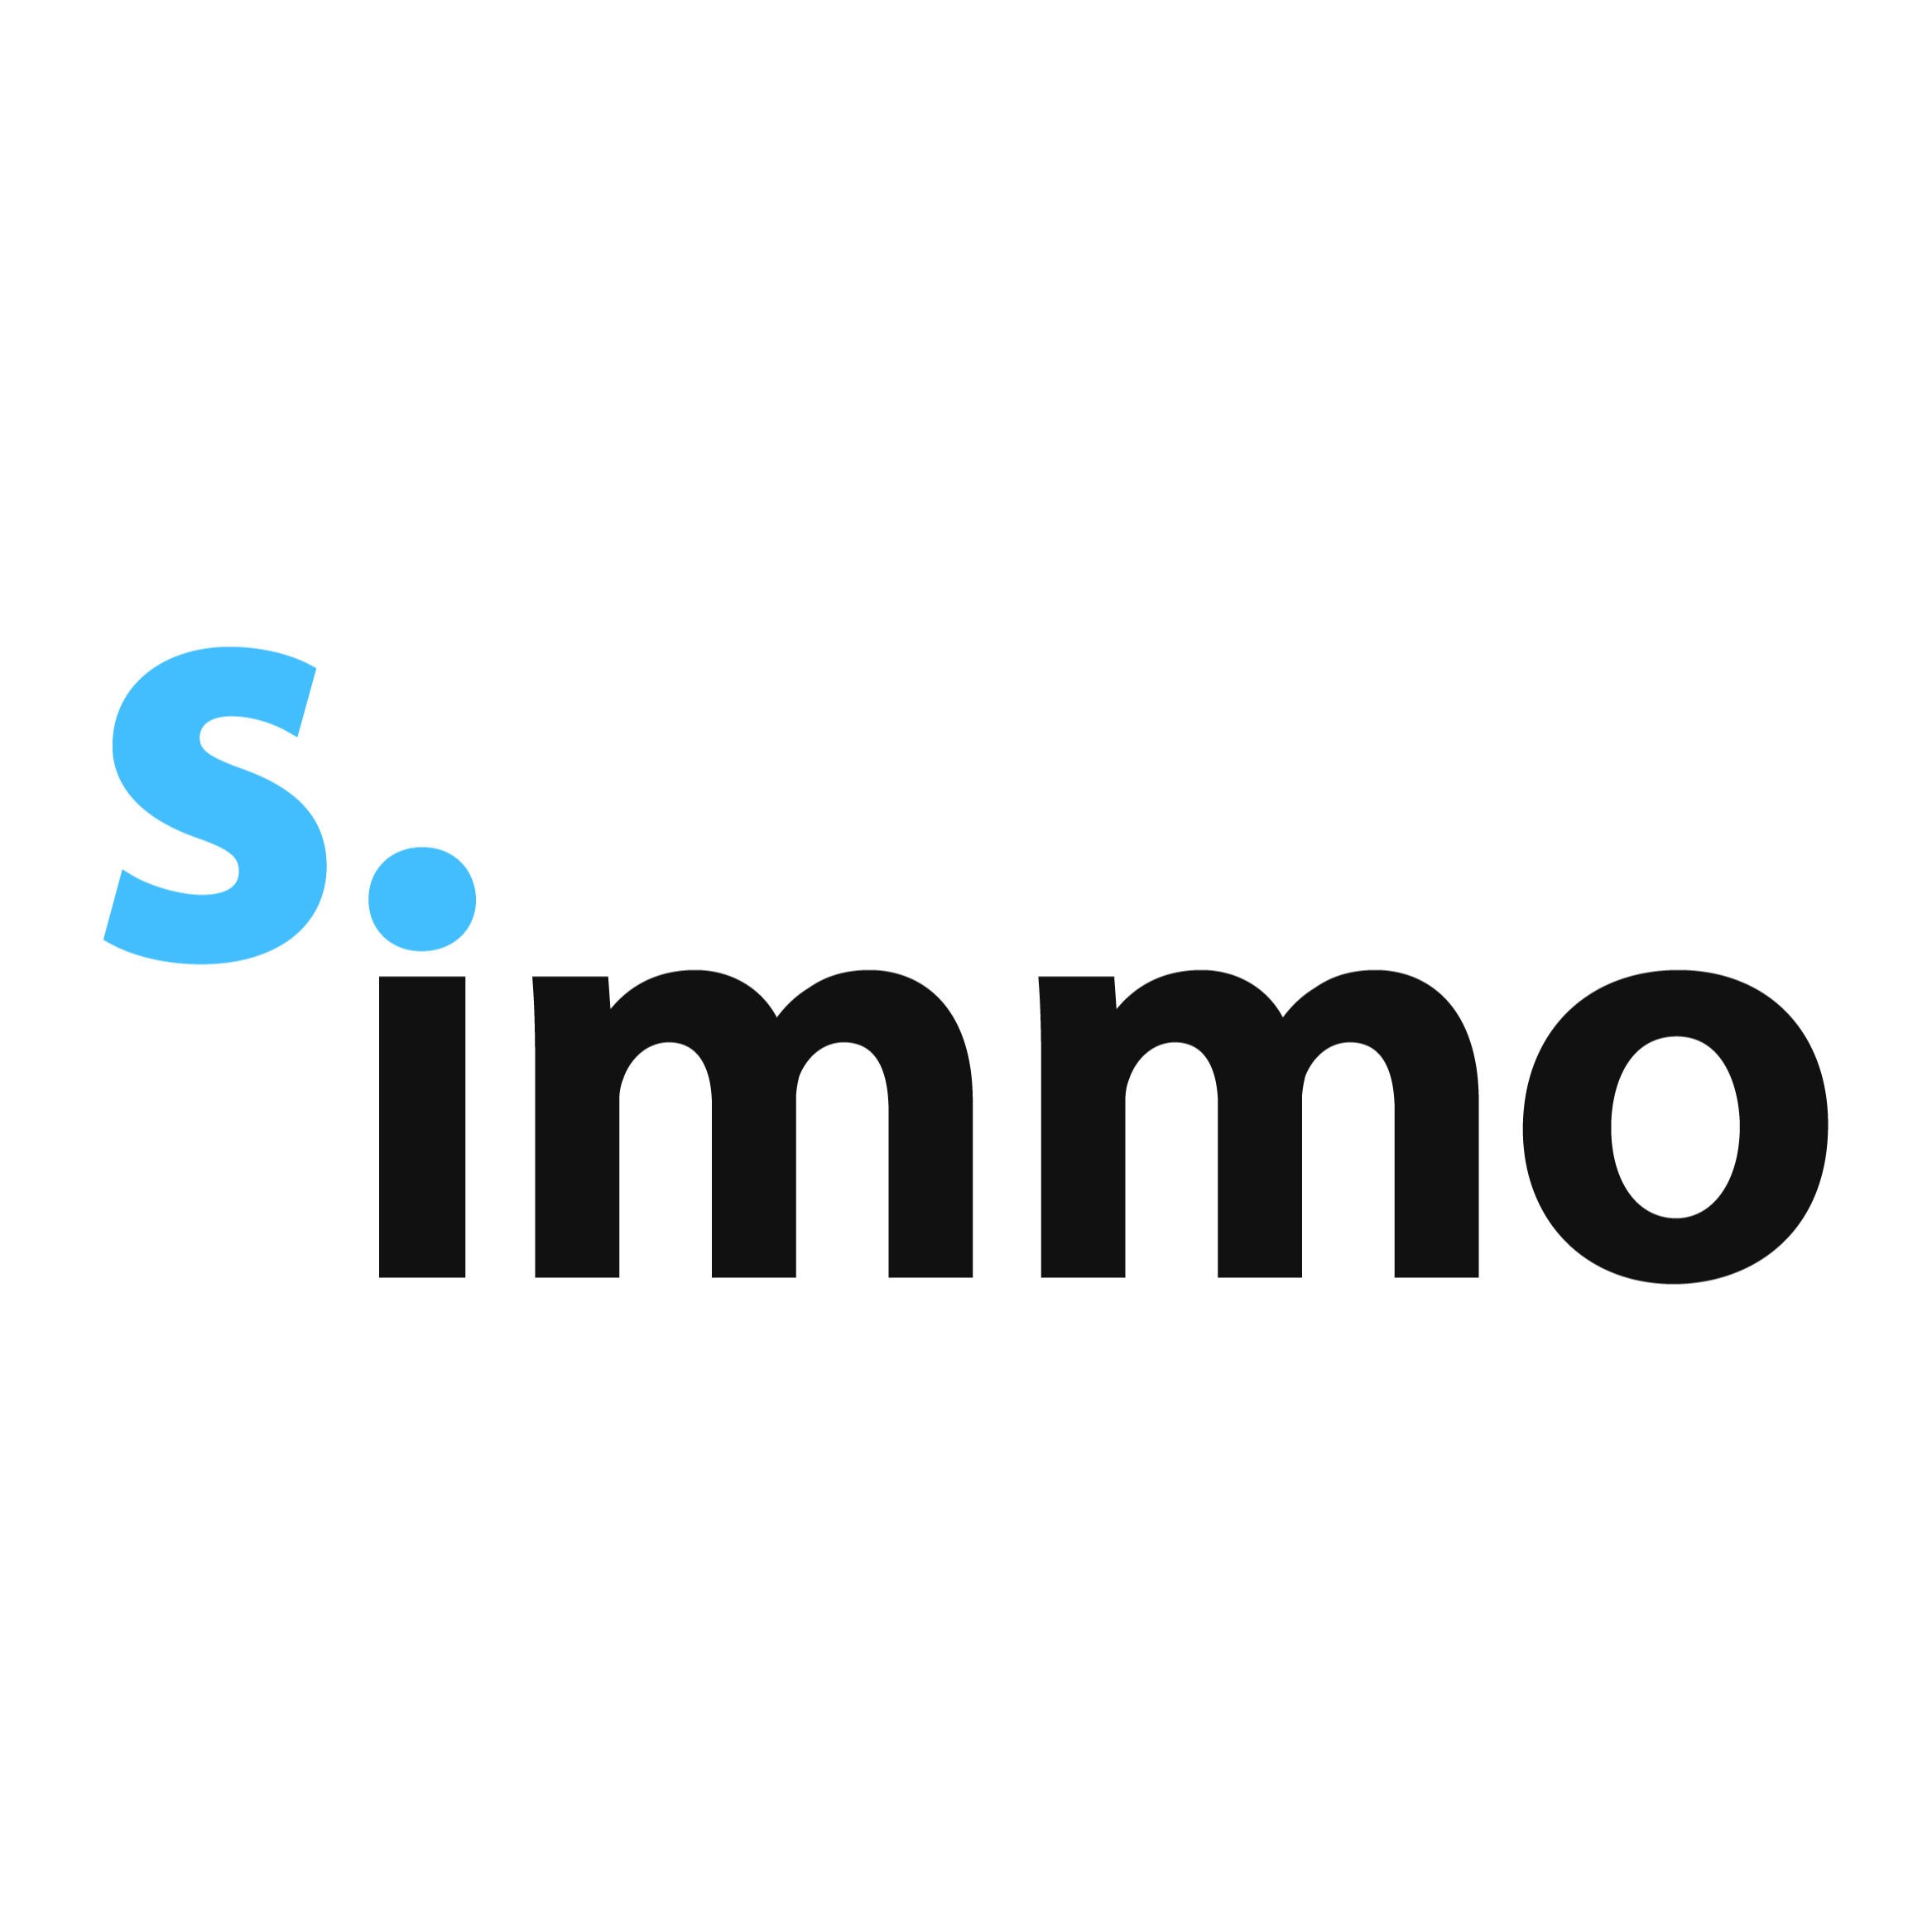 s.immo - Immobilienbüro Schwanke in Potsdam - Logo